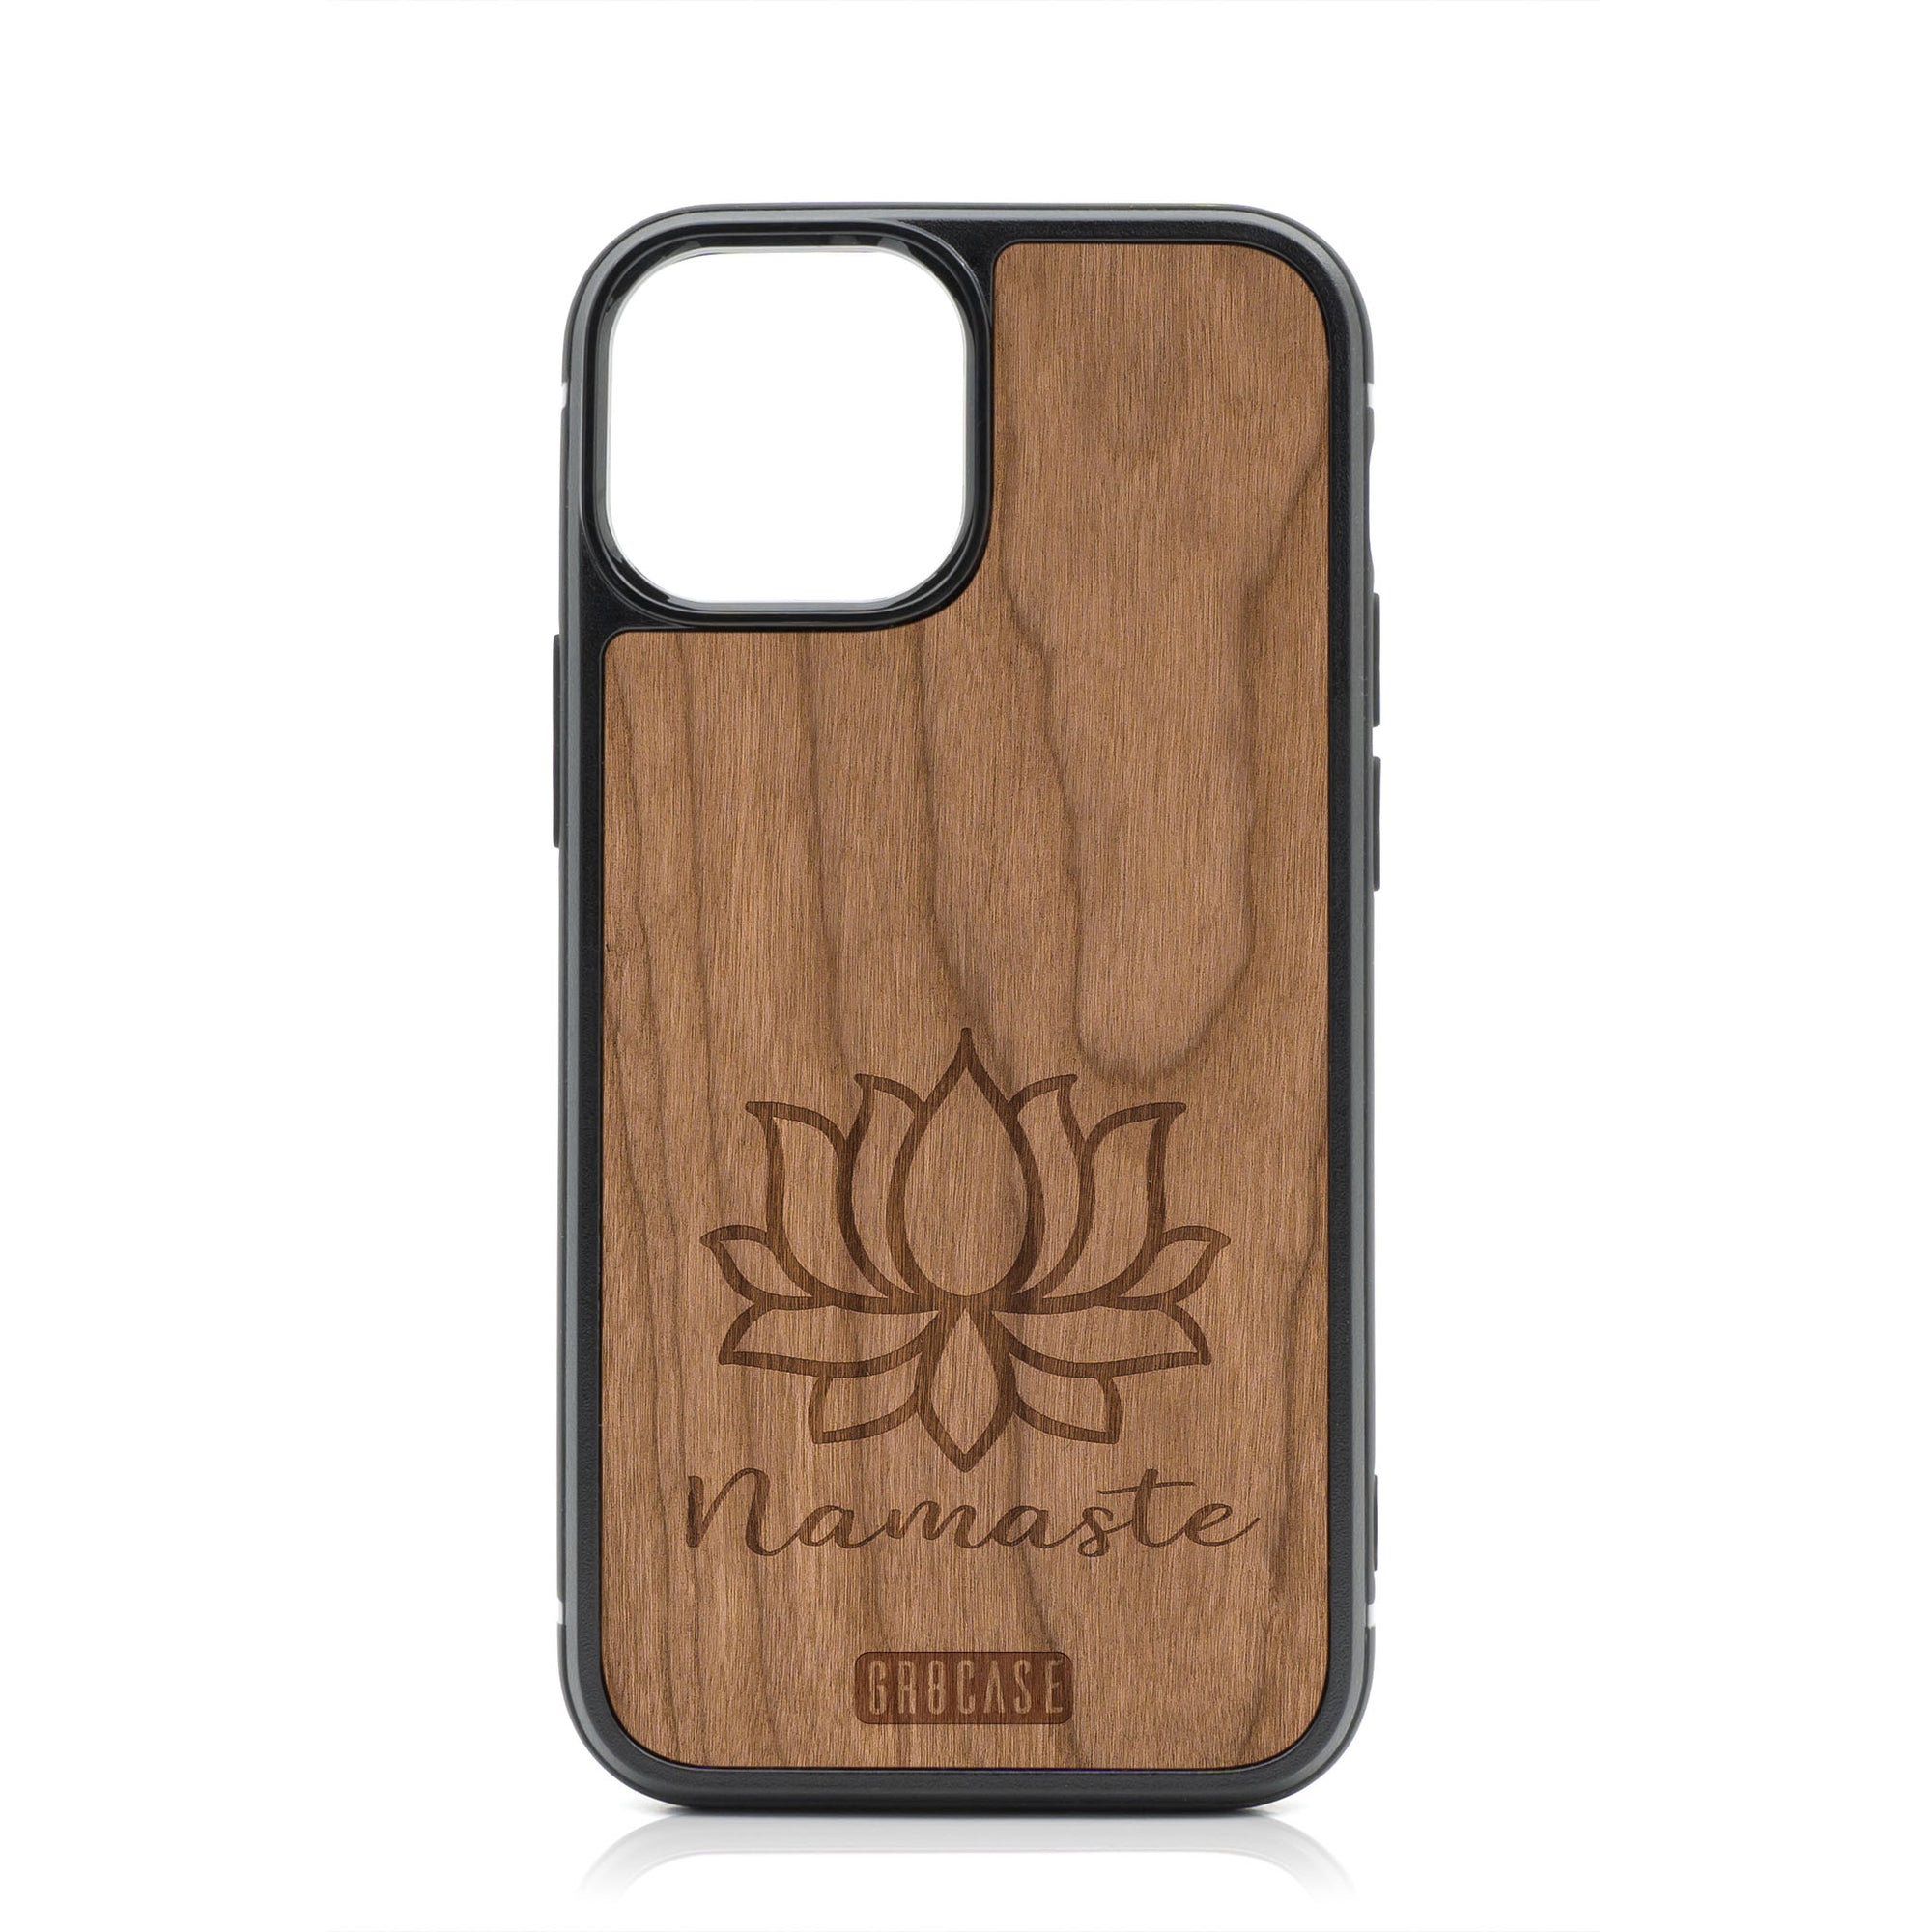 Namaste (Lotus Flower) Design Wood Case For iPhone 13 Mini